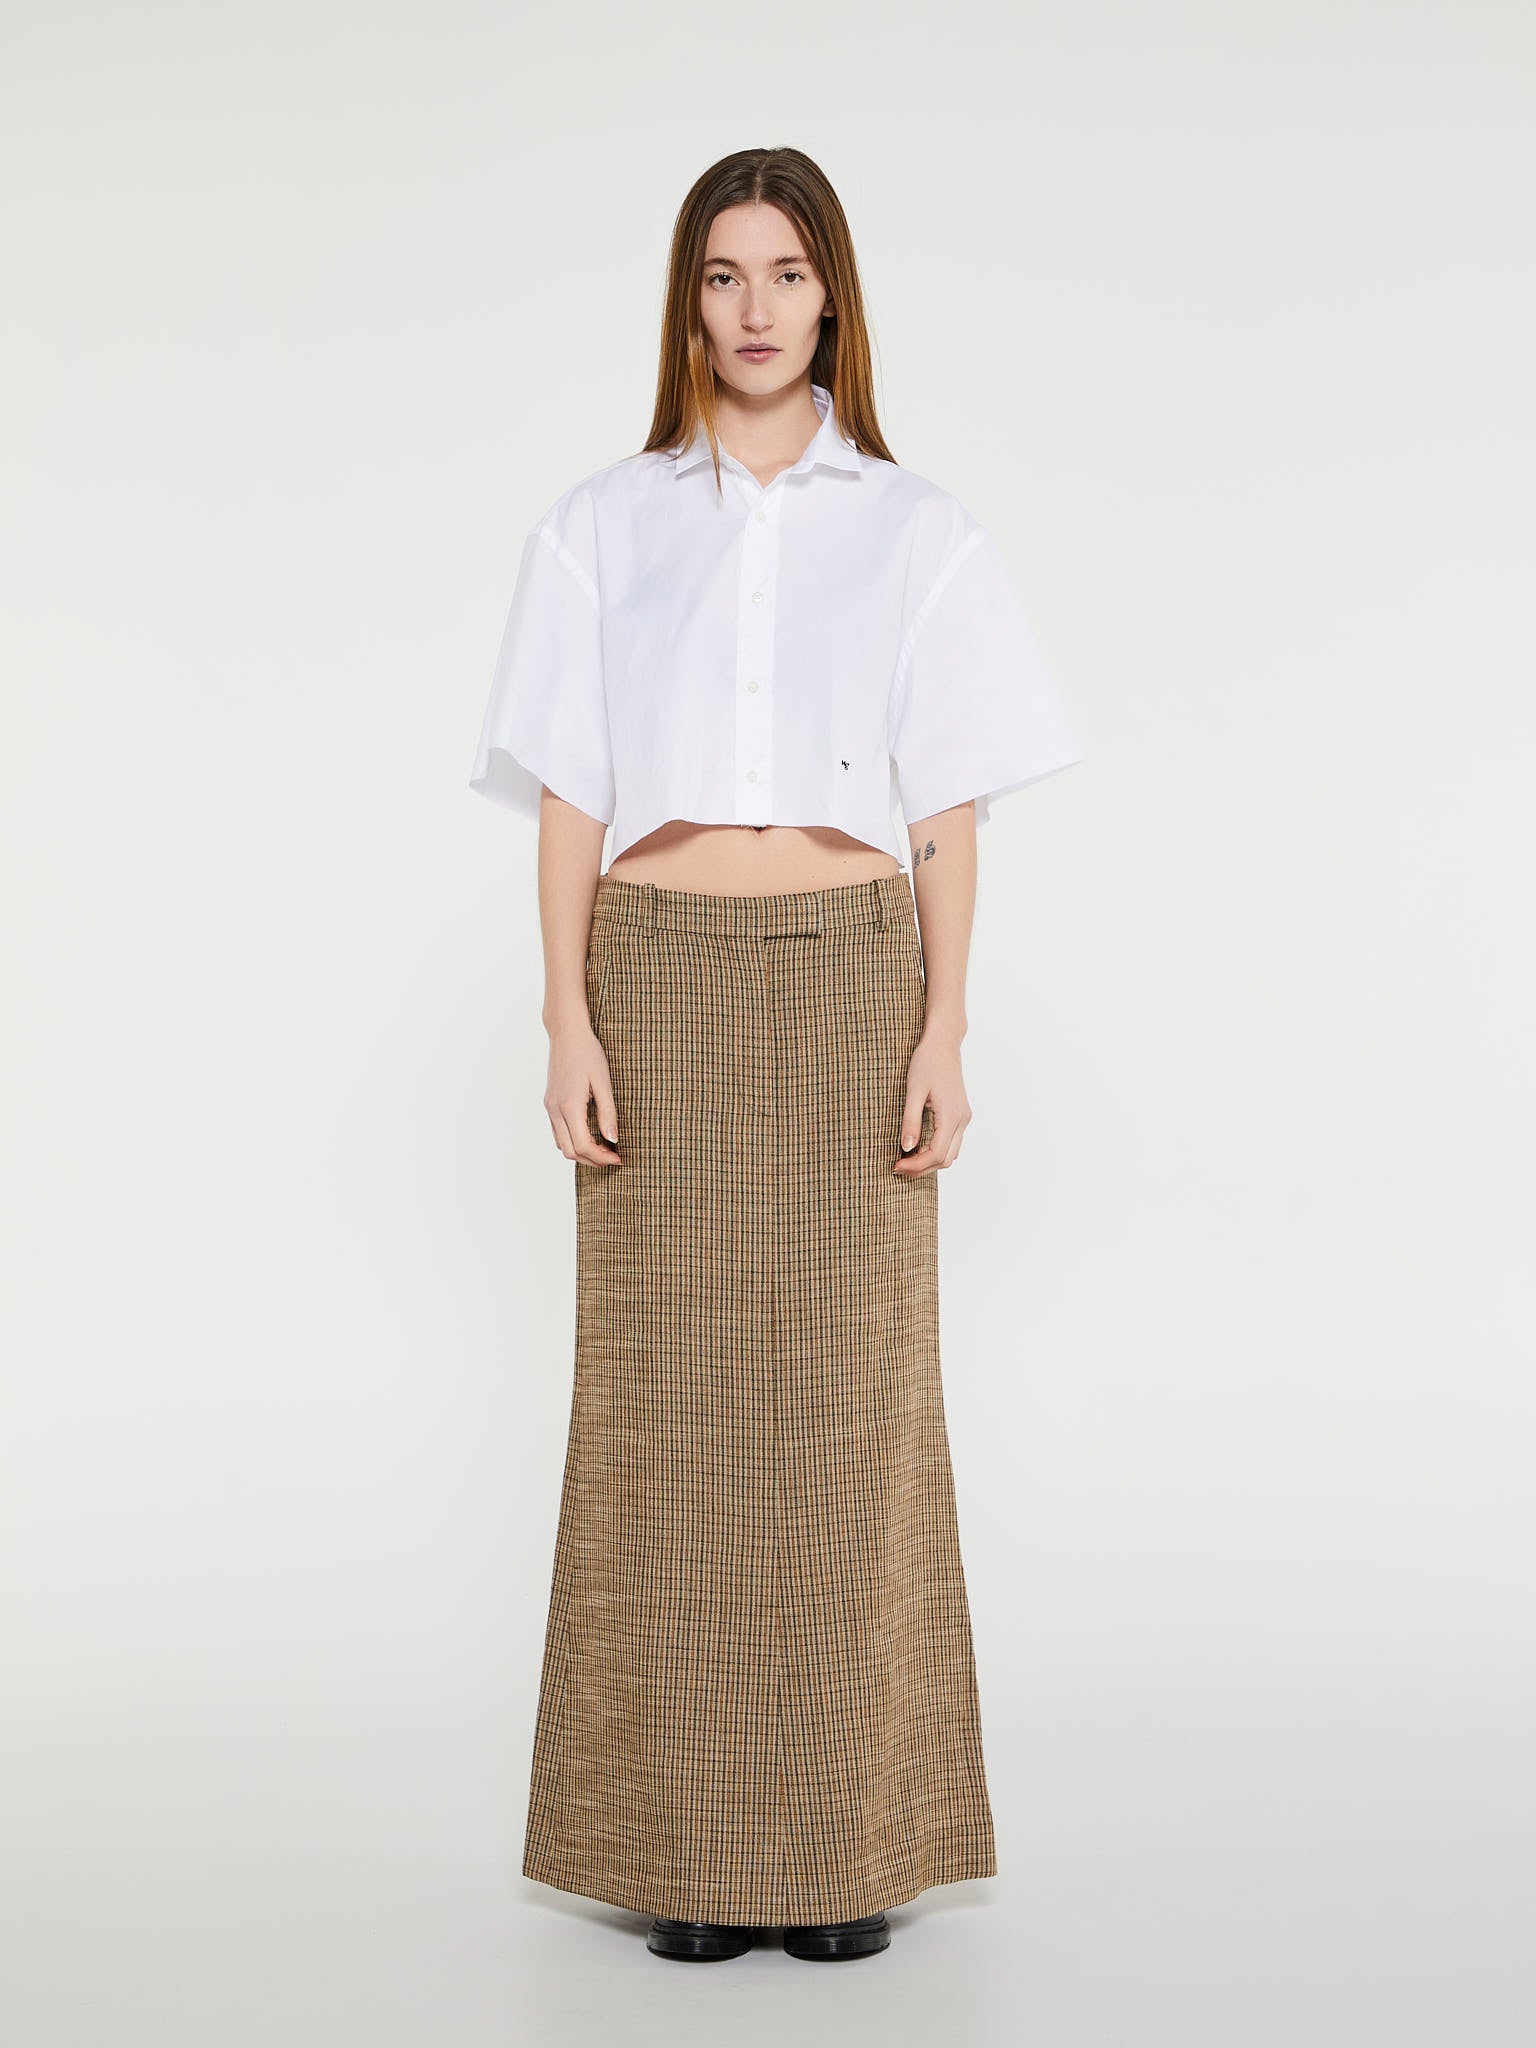 Acne Studios - Tailored Skirt in Multi Brown